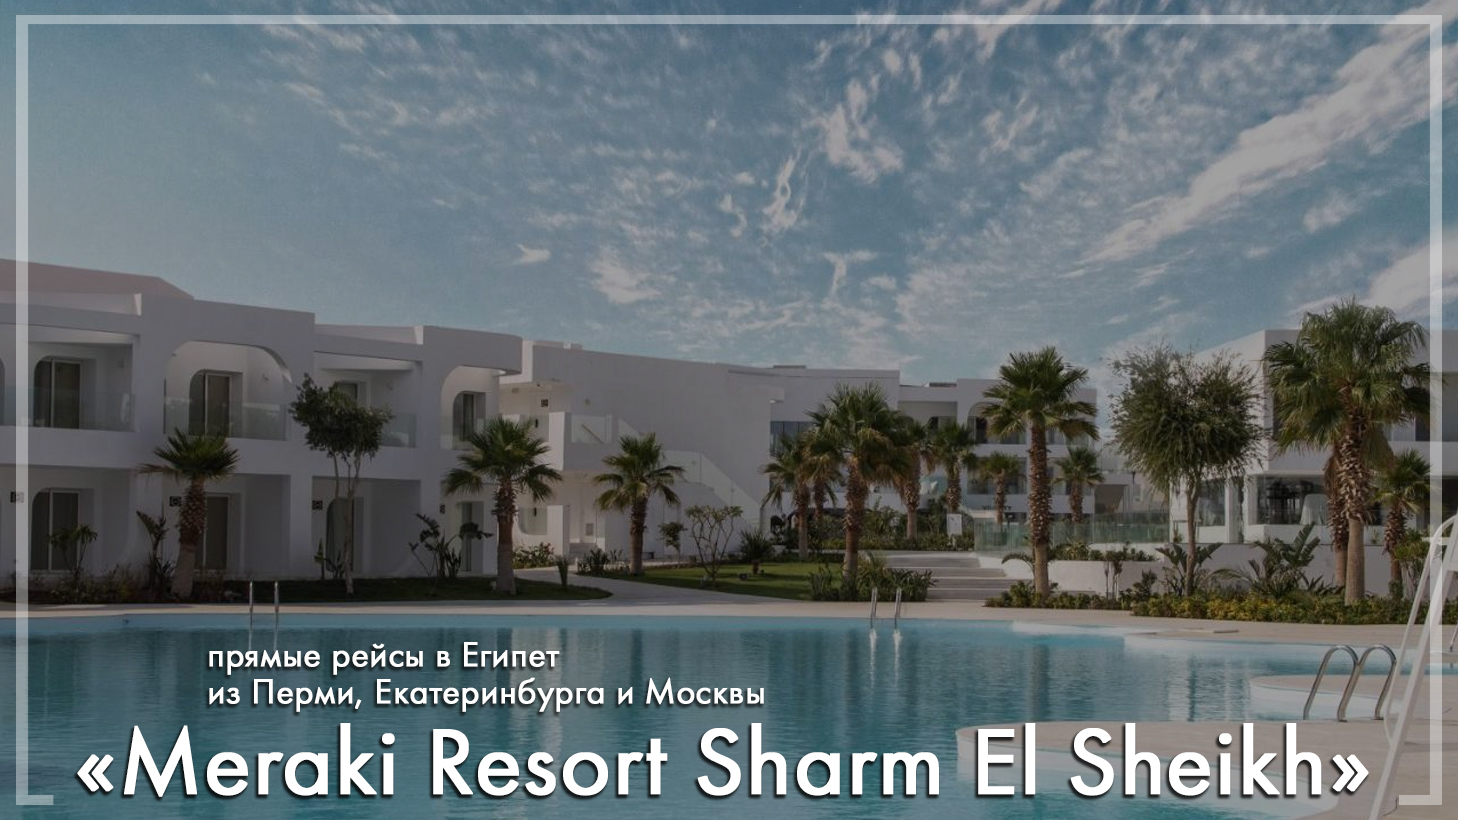 Meraki Resort Sharm El Sheikh в Египте. Туры из Екатеринбурга